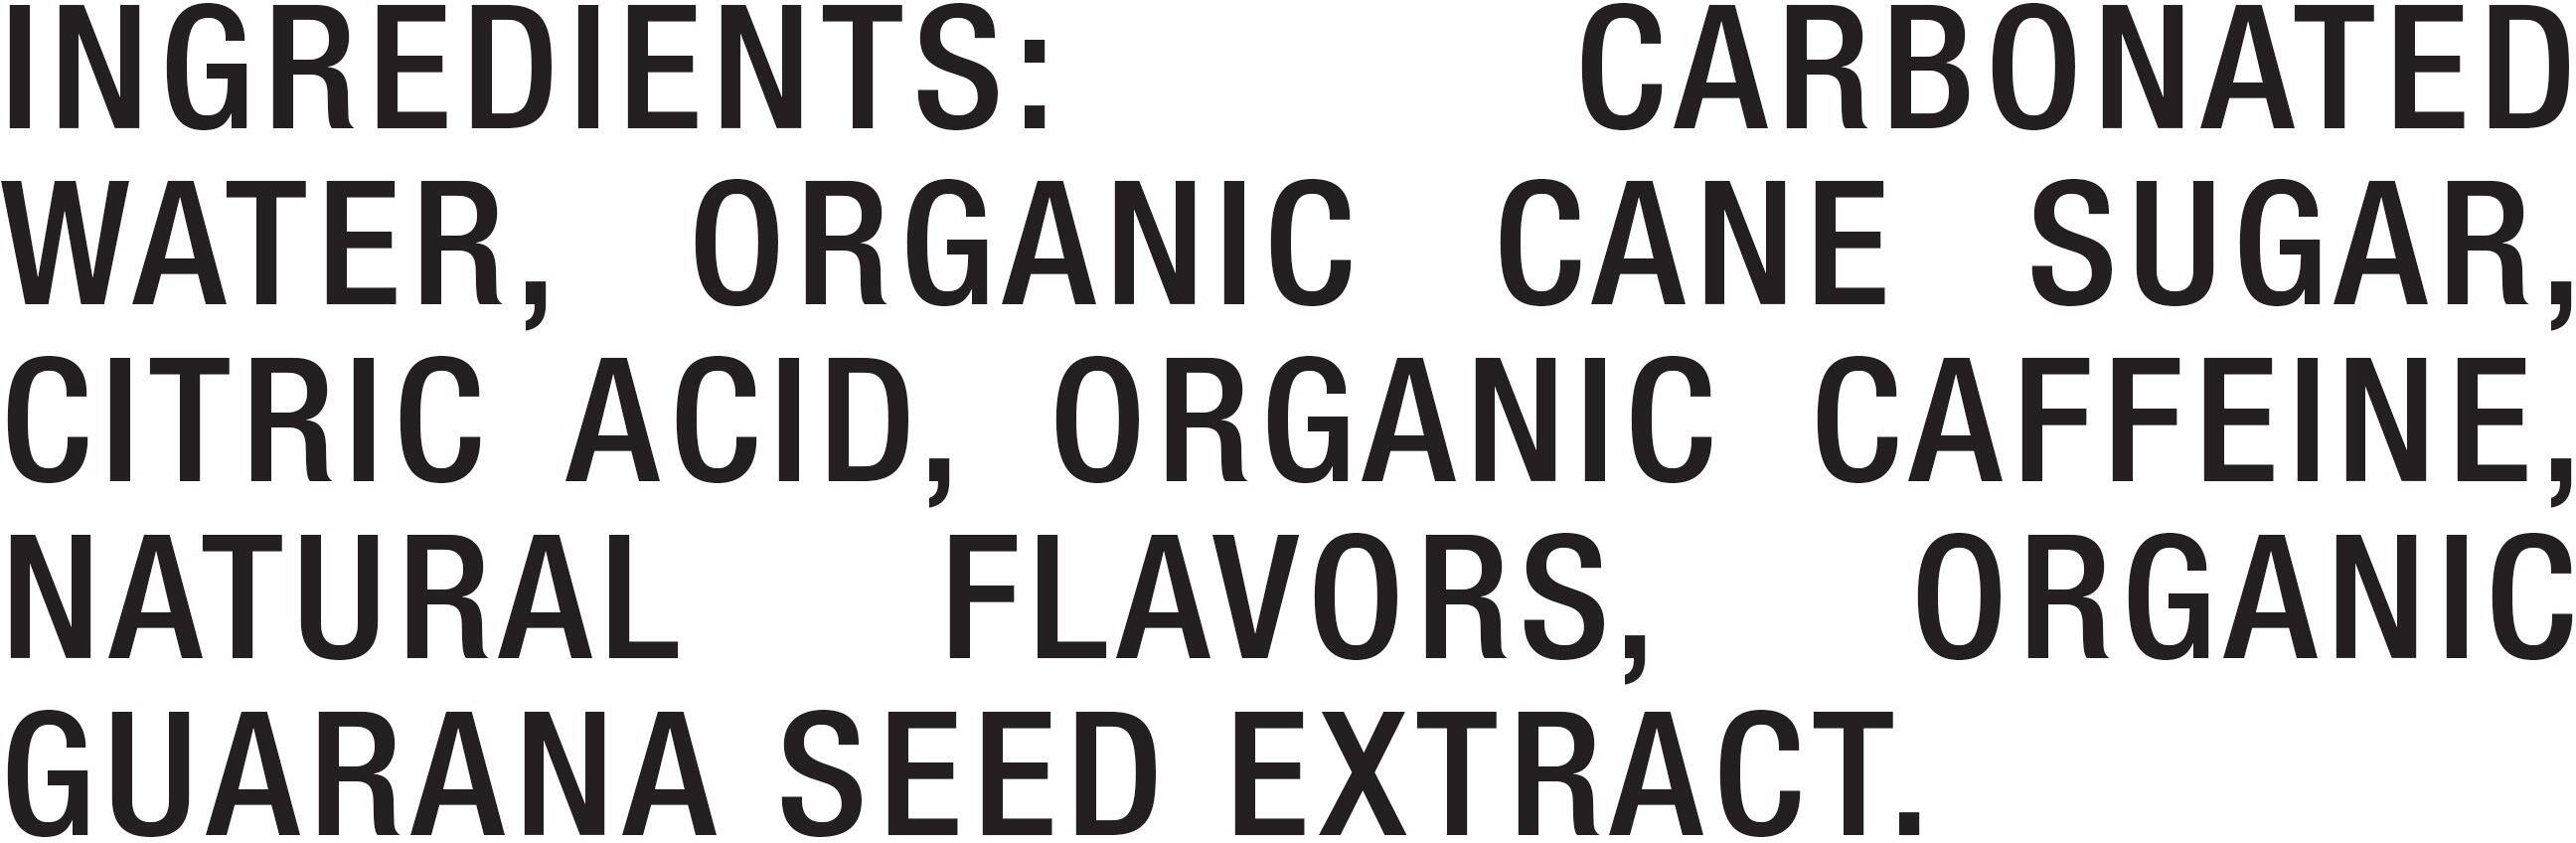 Image describing nutrition information for product Rockstar Organic Island Fruit